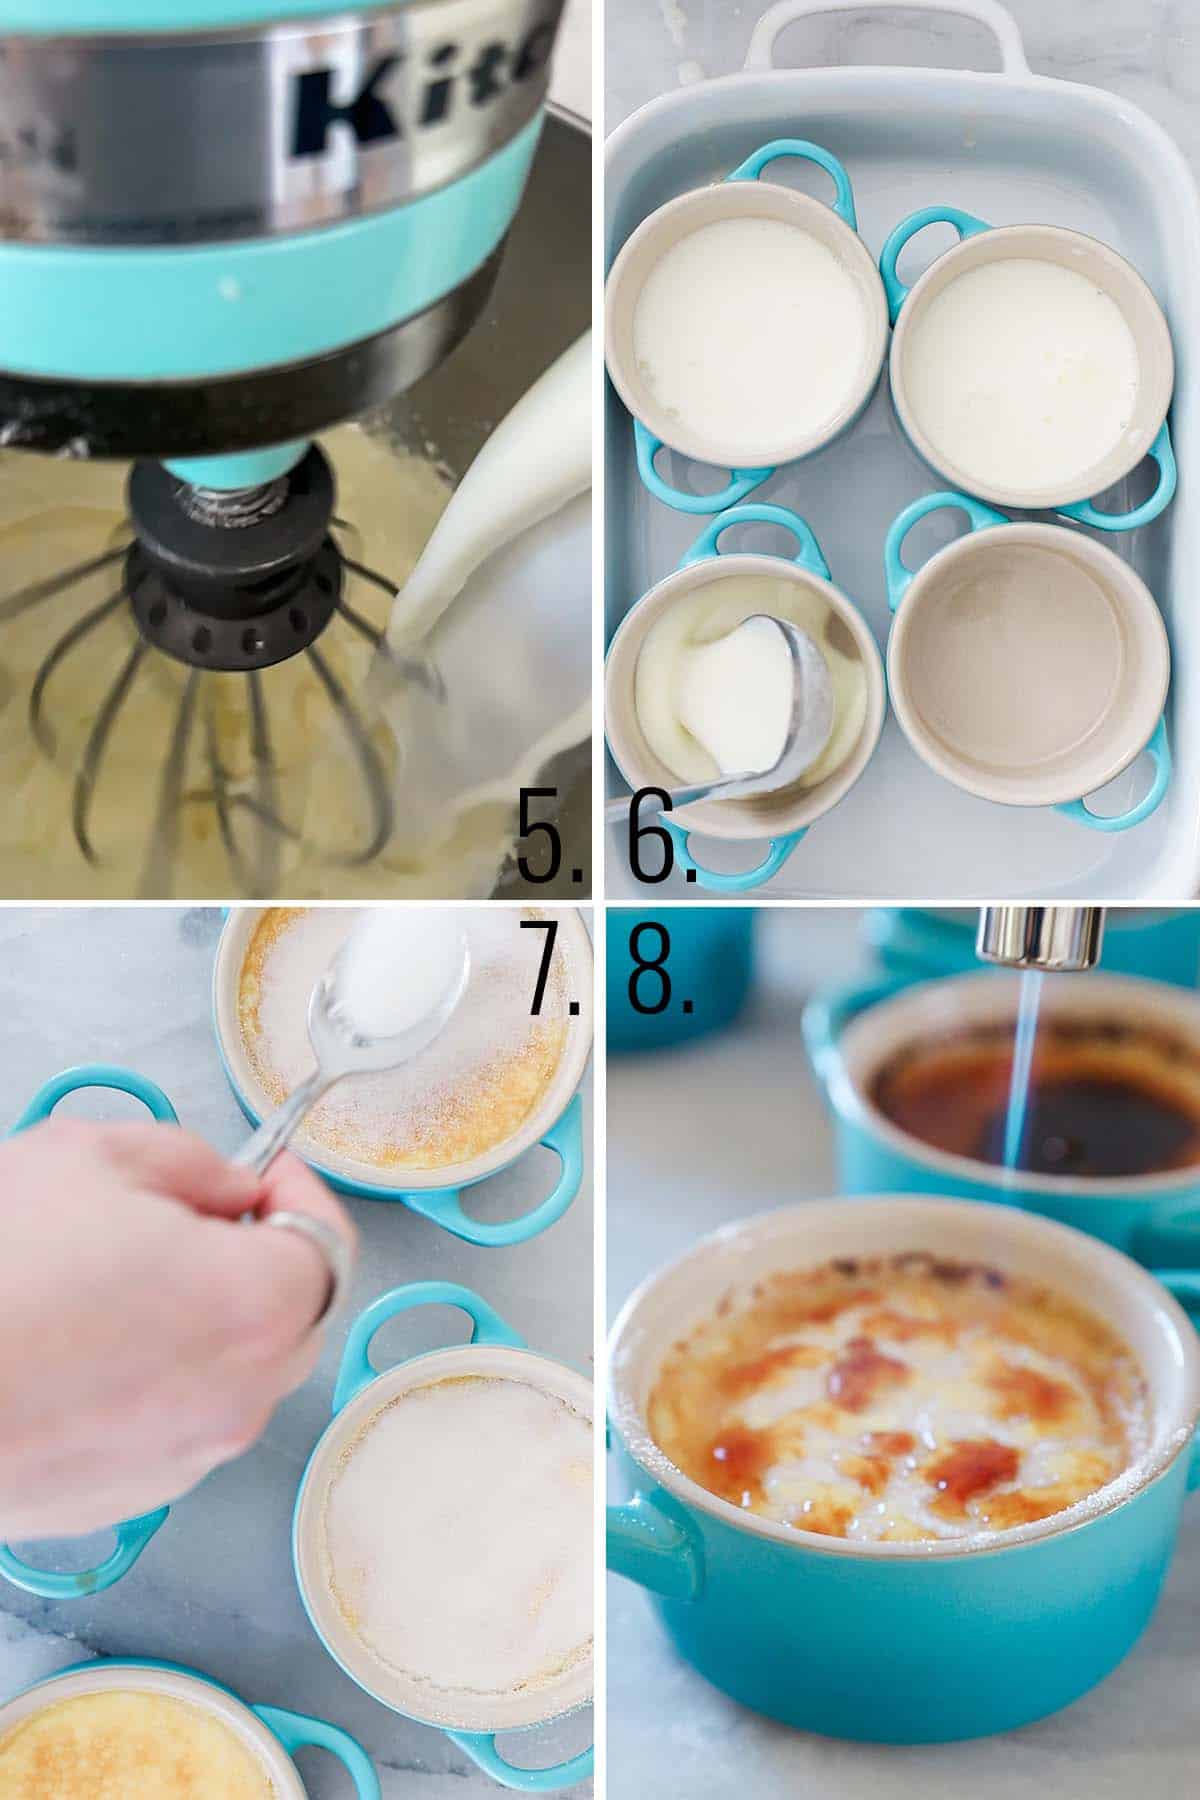 How to make creme brûlée.